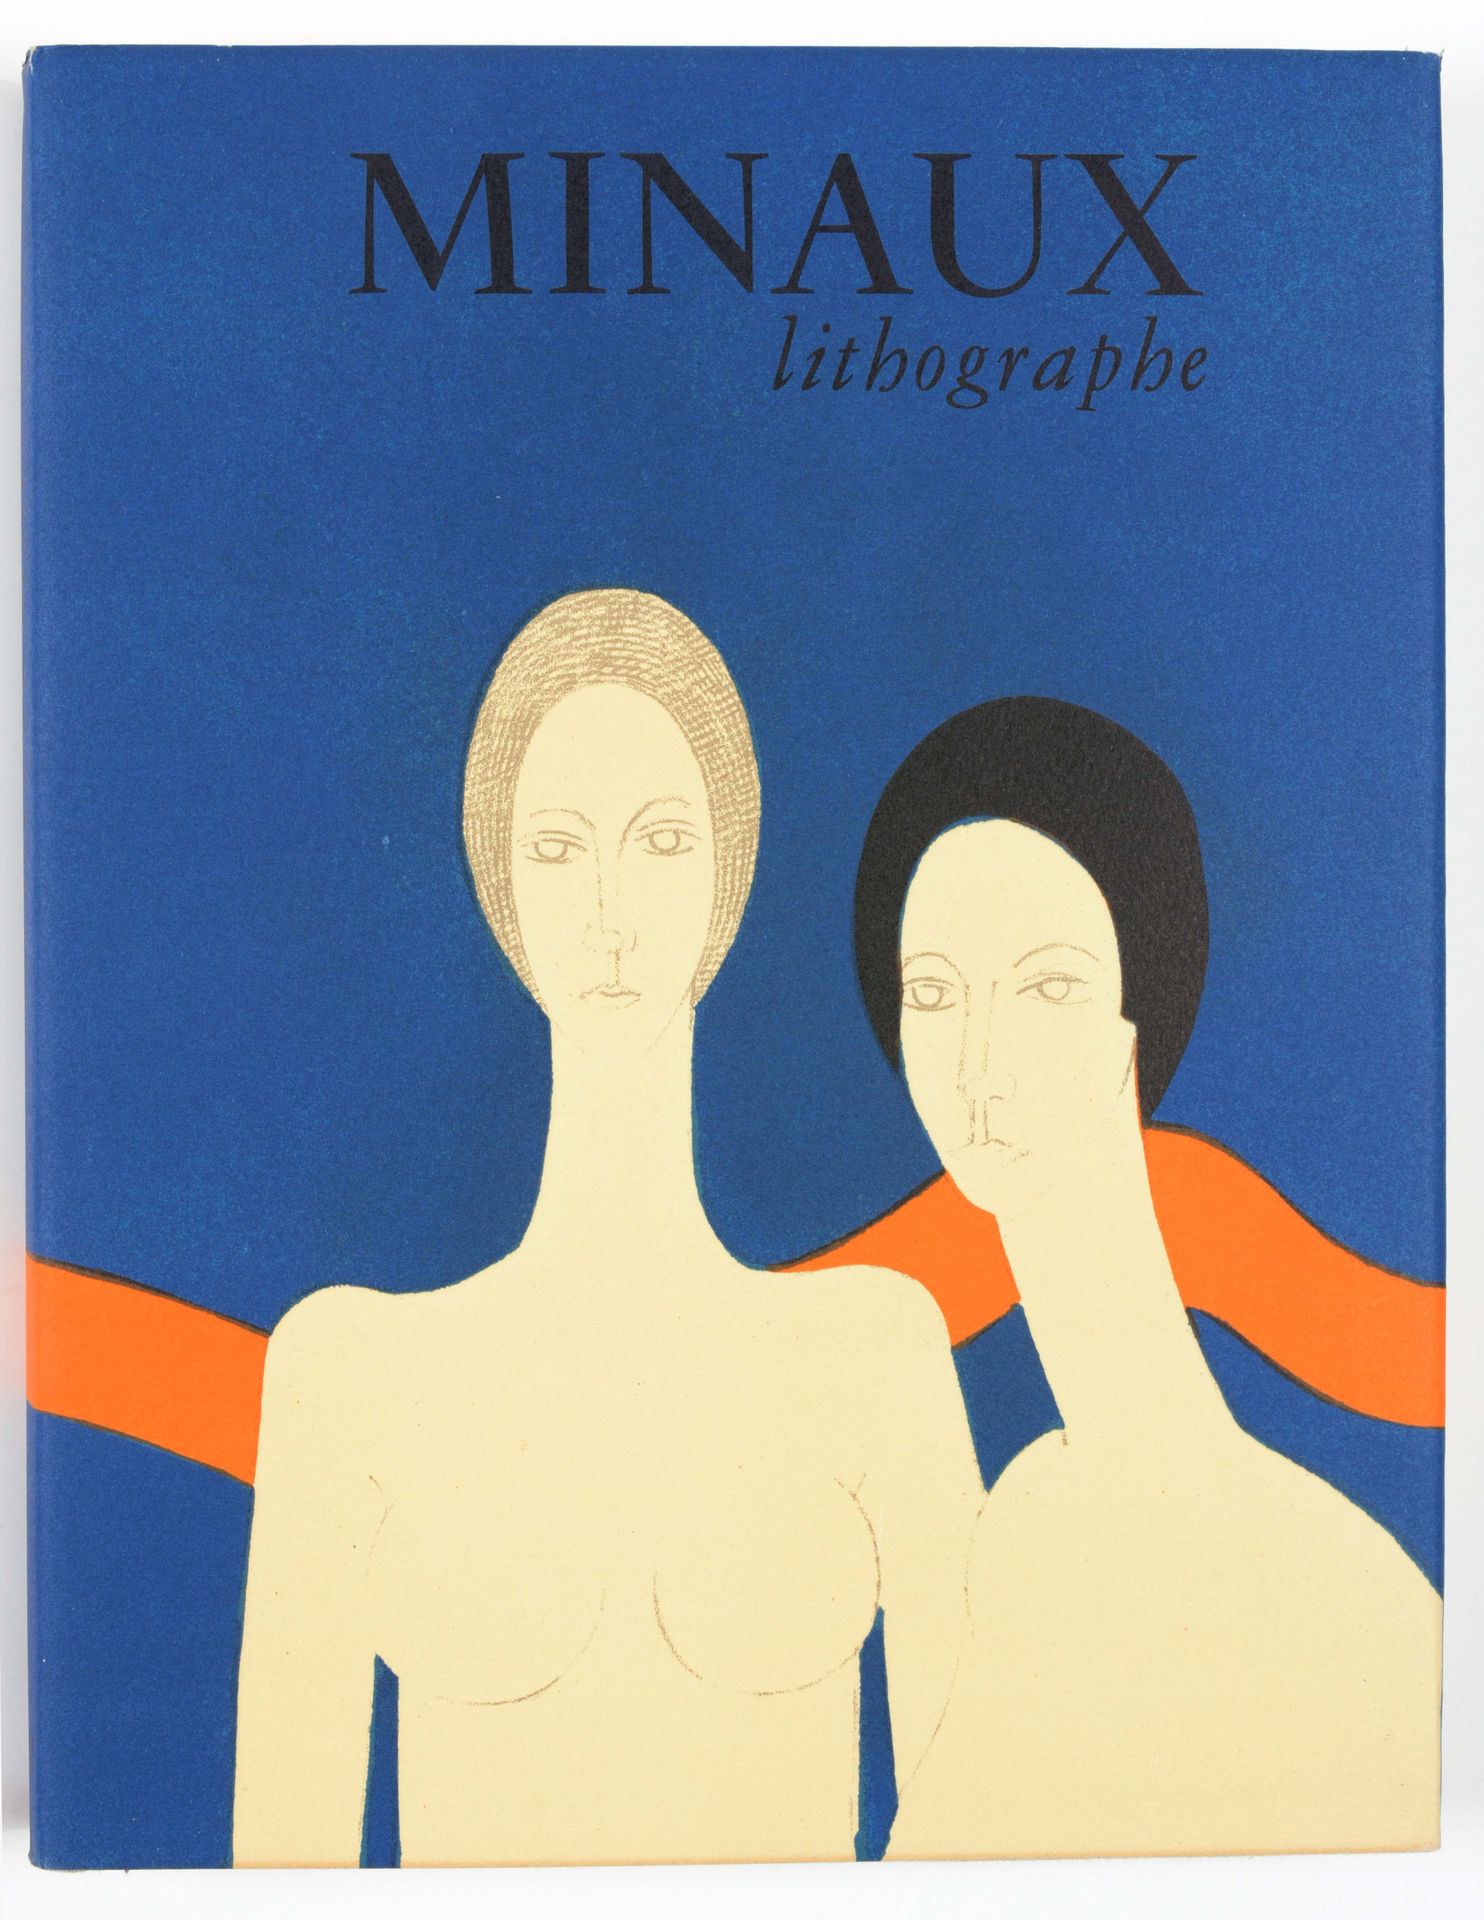 [MINAUX] SORLIER, Charles Minaux-Lithograph 1948-1973

Gr. In-4°, 207 S., mit 6 &hellip;